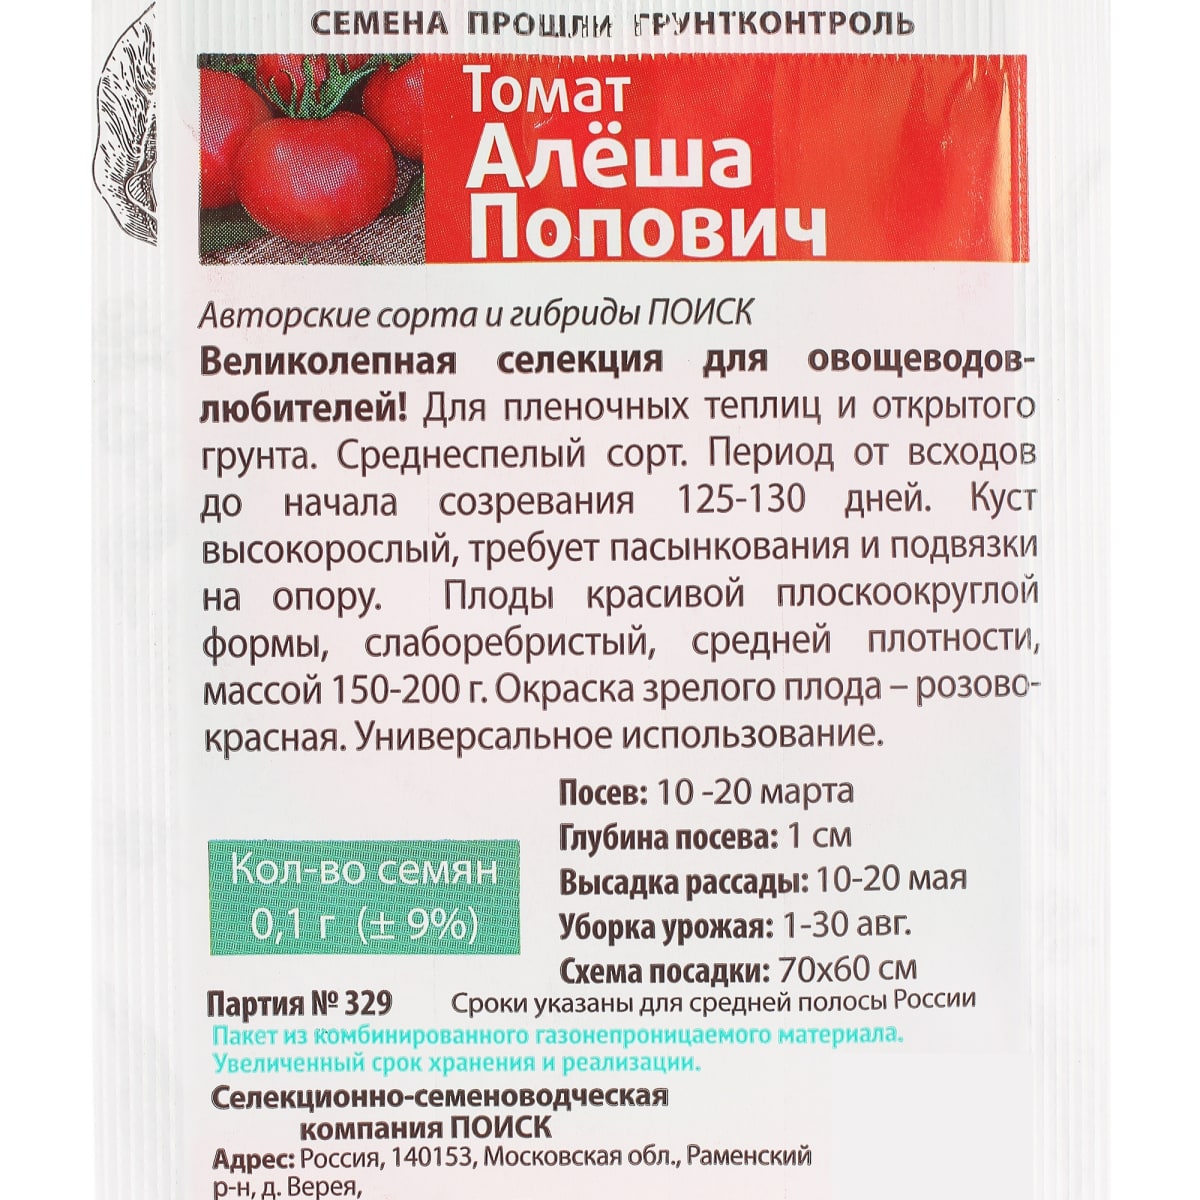 Характеристика и описание сорта Алеша Попович и выращивание томата